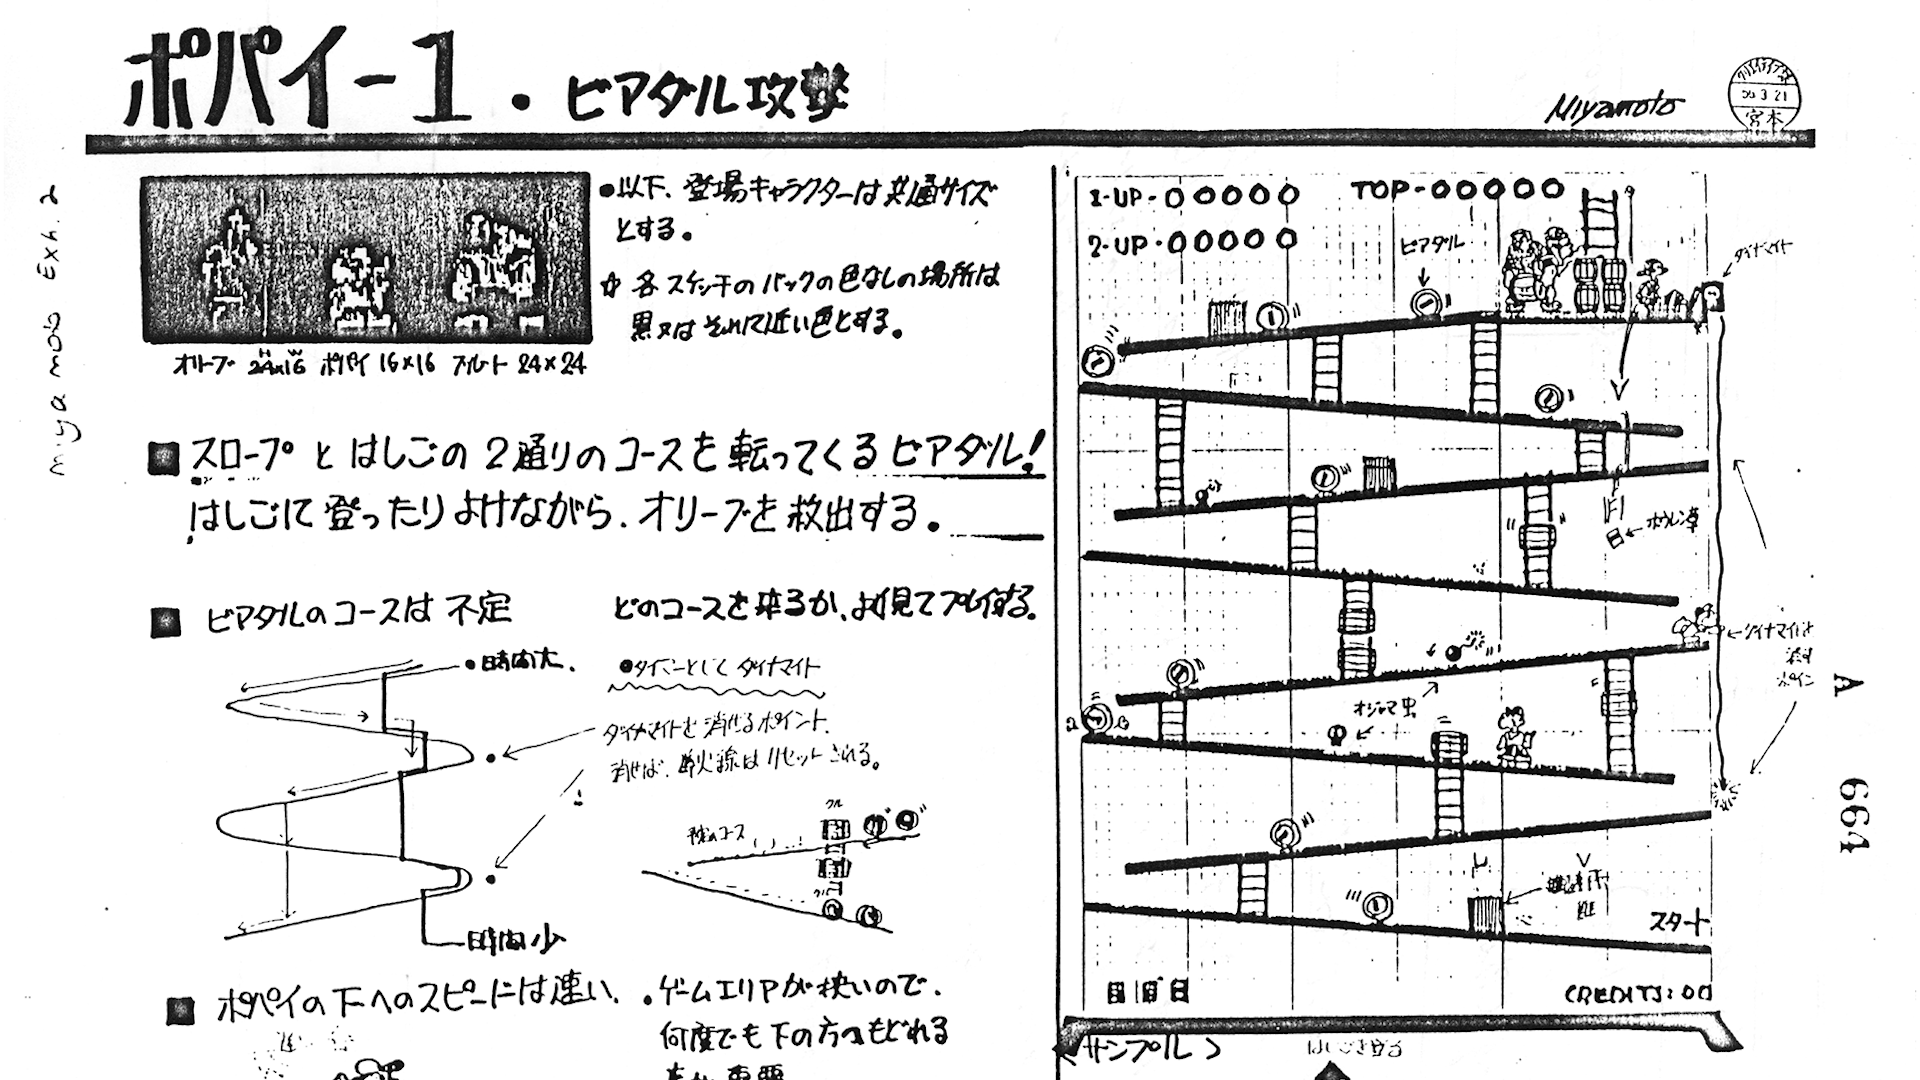 Early Donkey Kong Design Document From Miyamoto Showcases 'Popeye